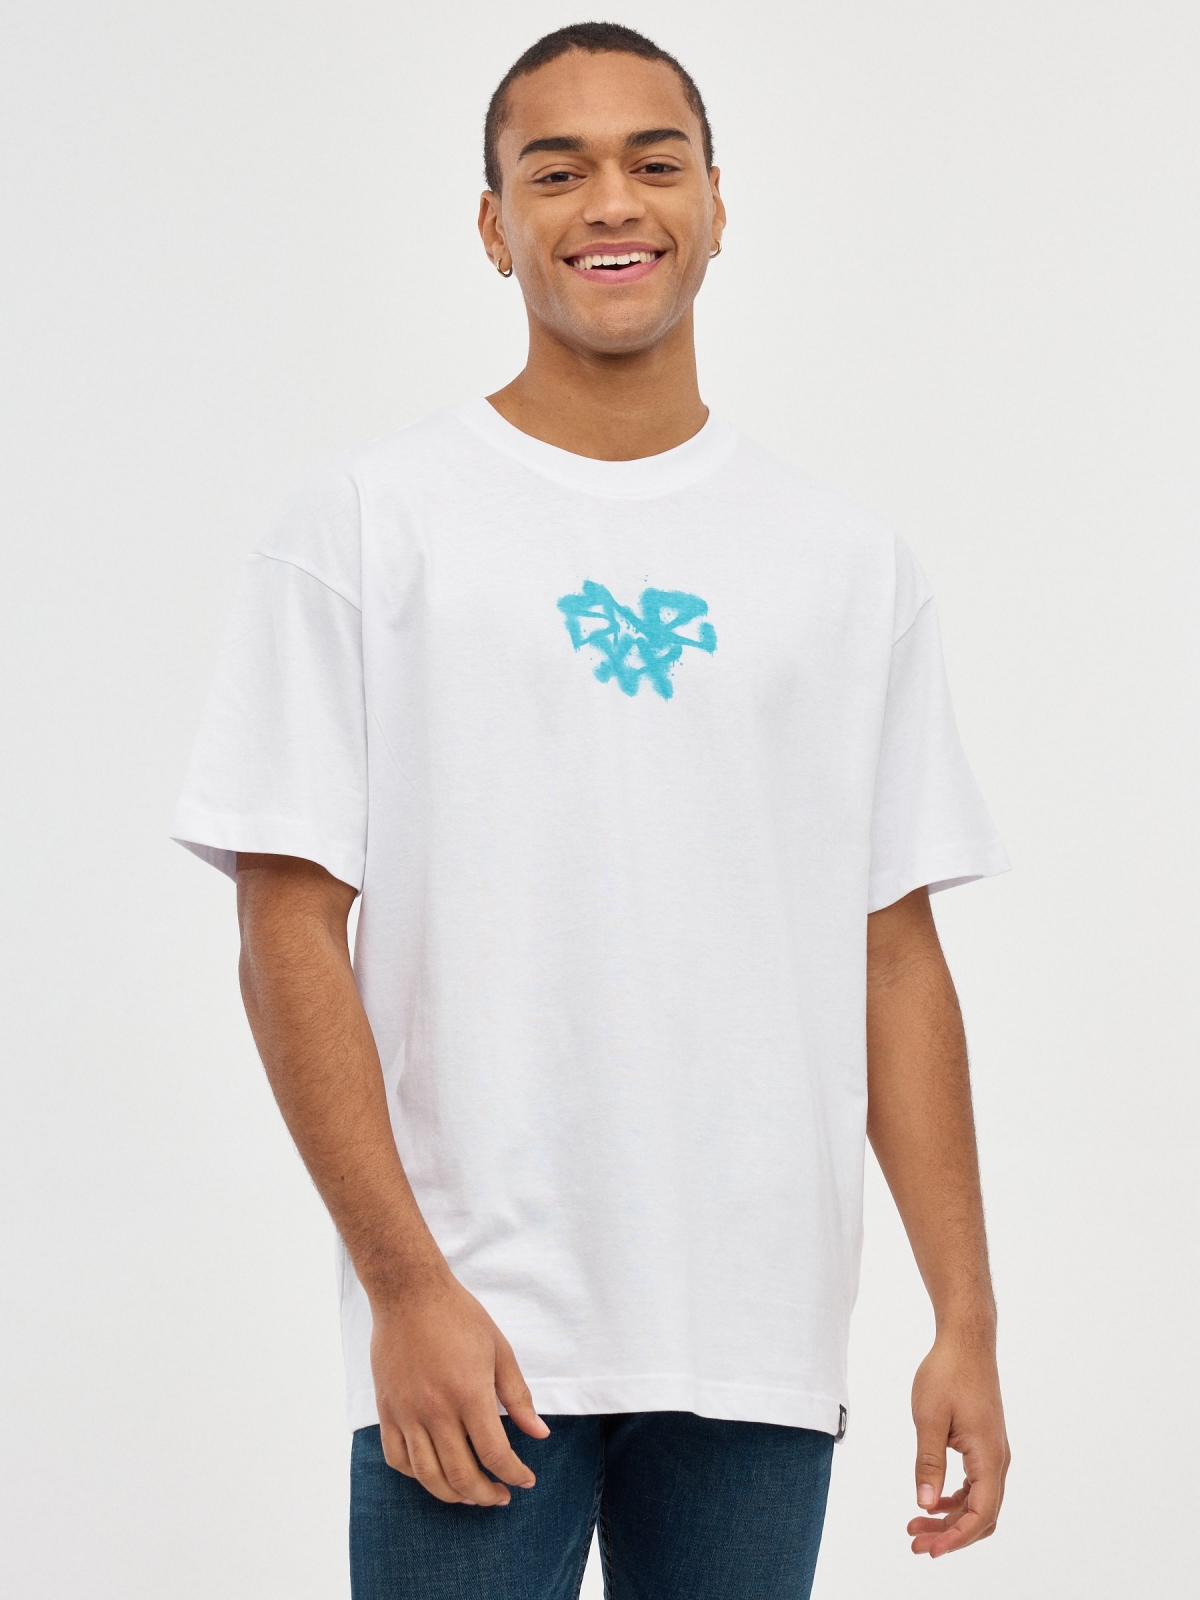 Camiseta graffiti azul blanco vista media frontal